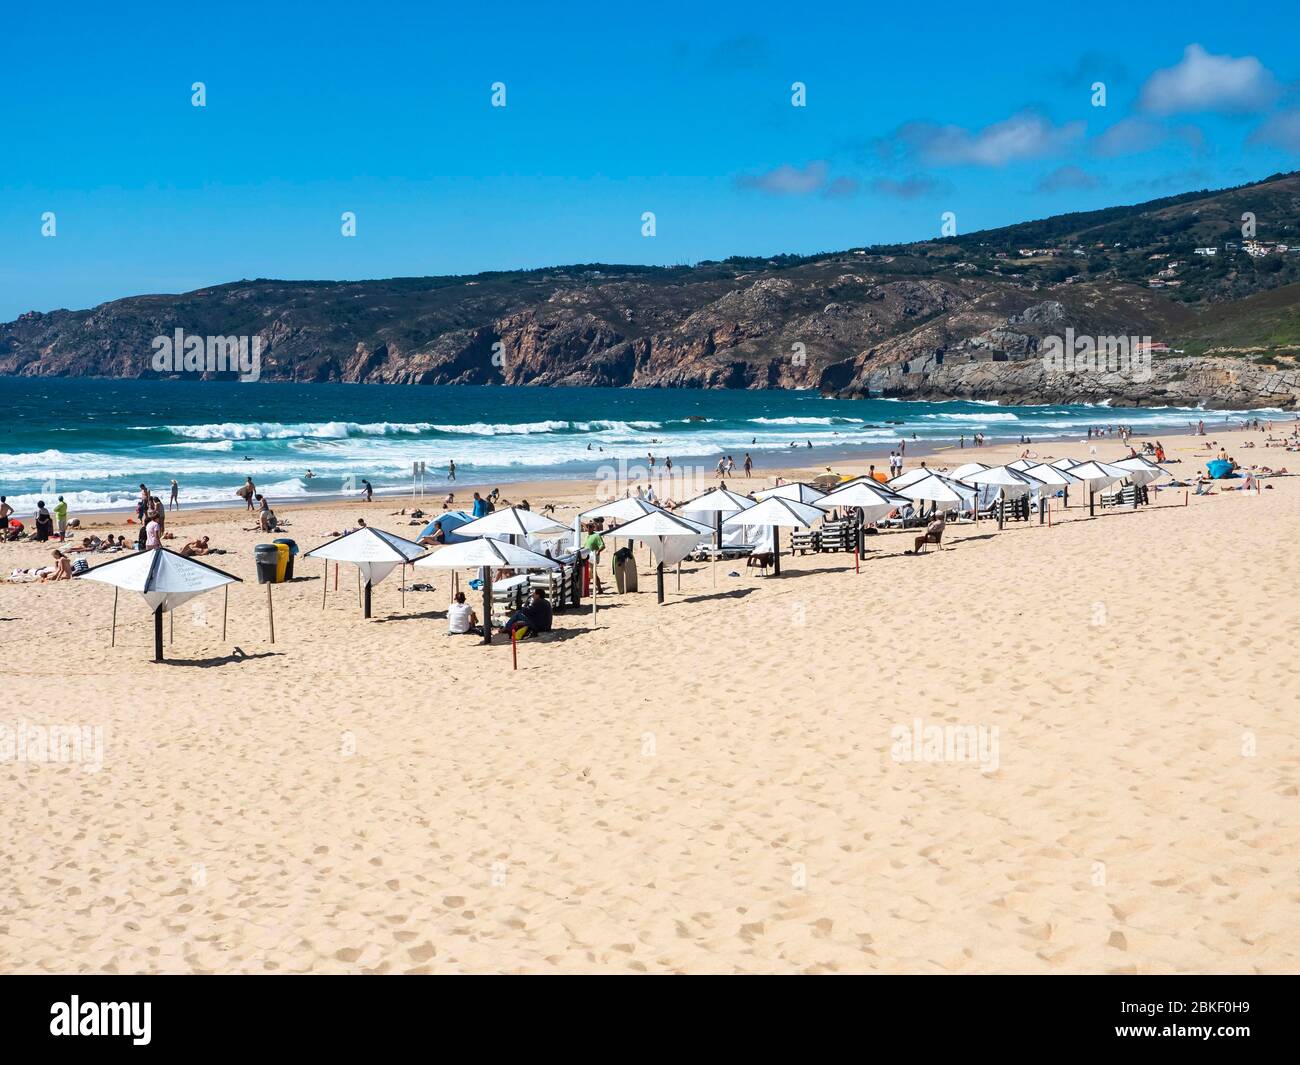 Praia do Guincho, Atlantic Ocean beach, Cascais region, Portugal Stock Photo